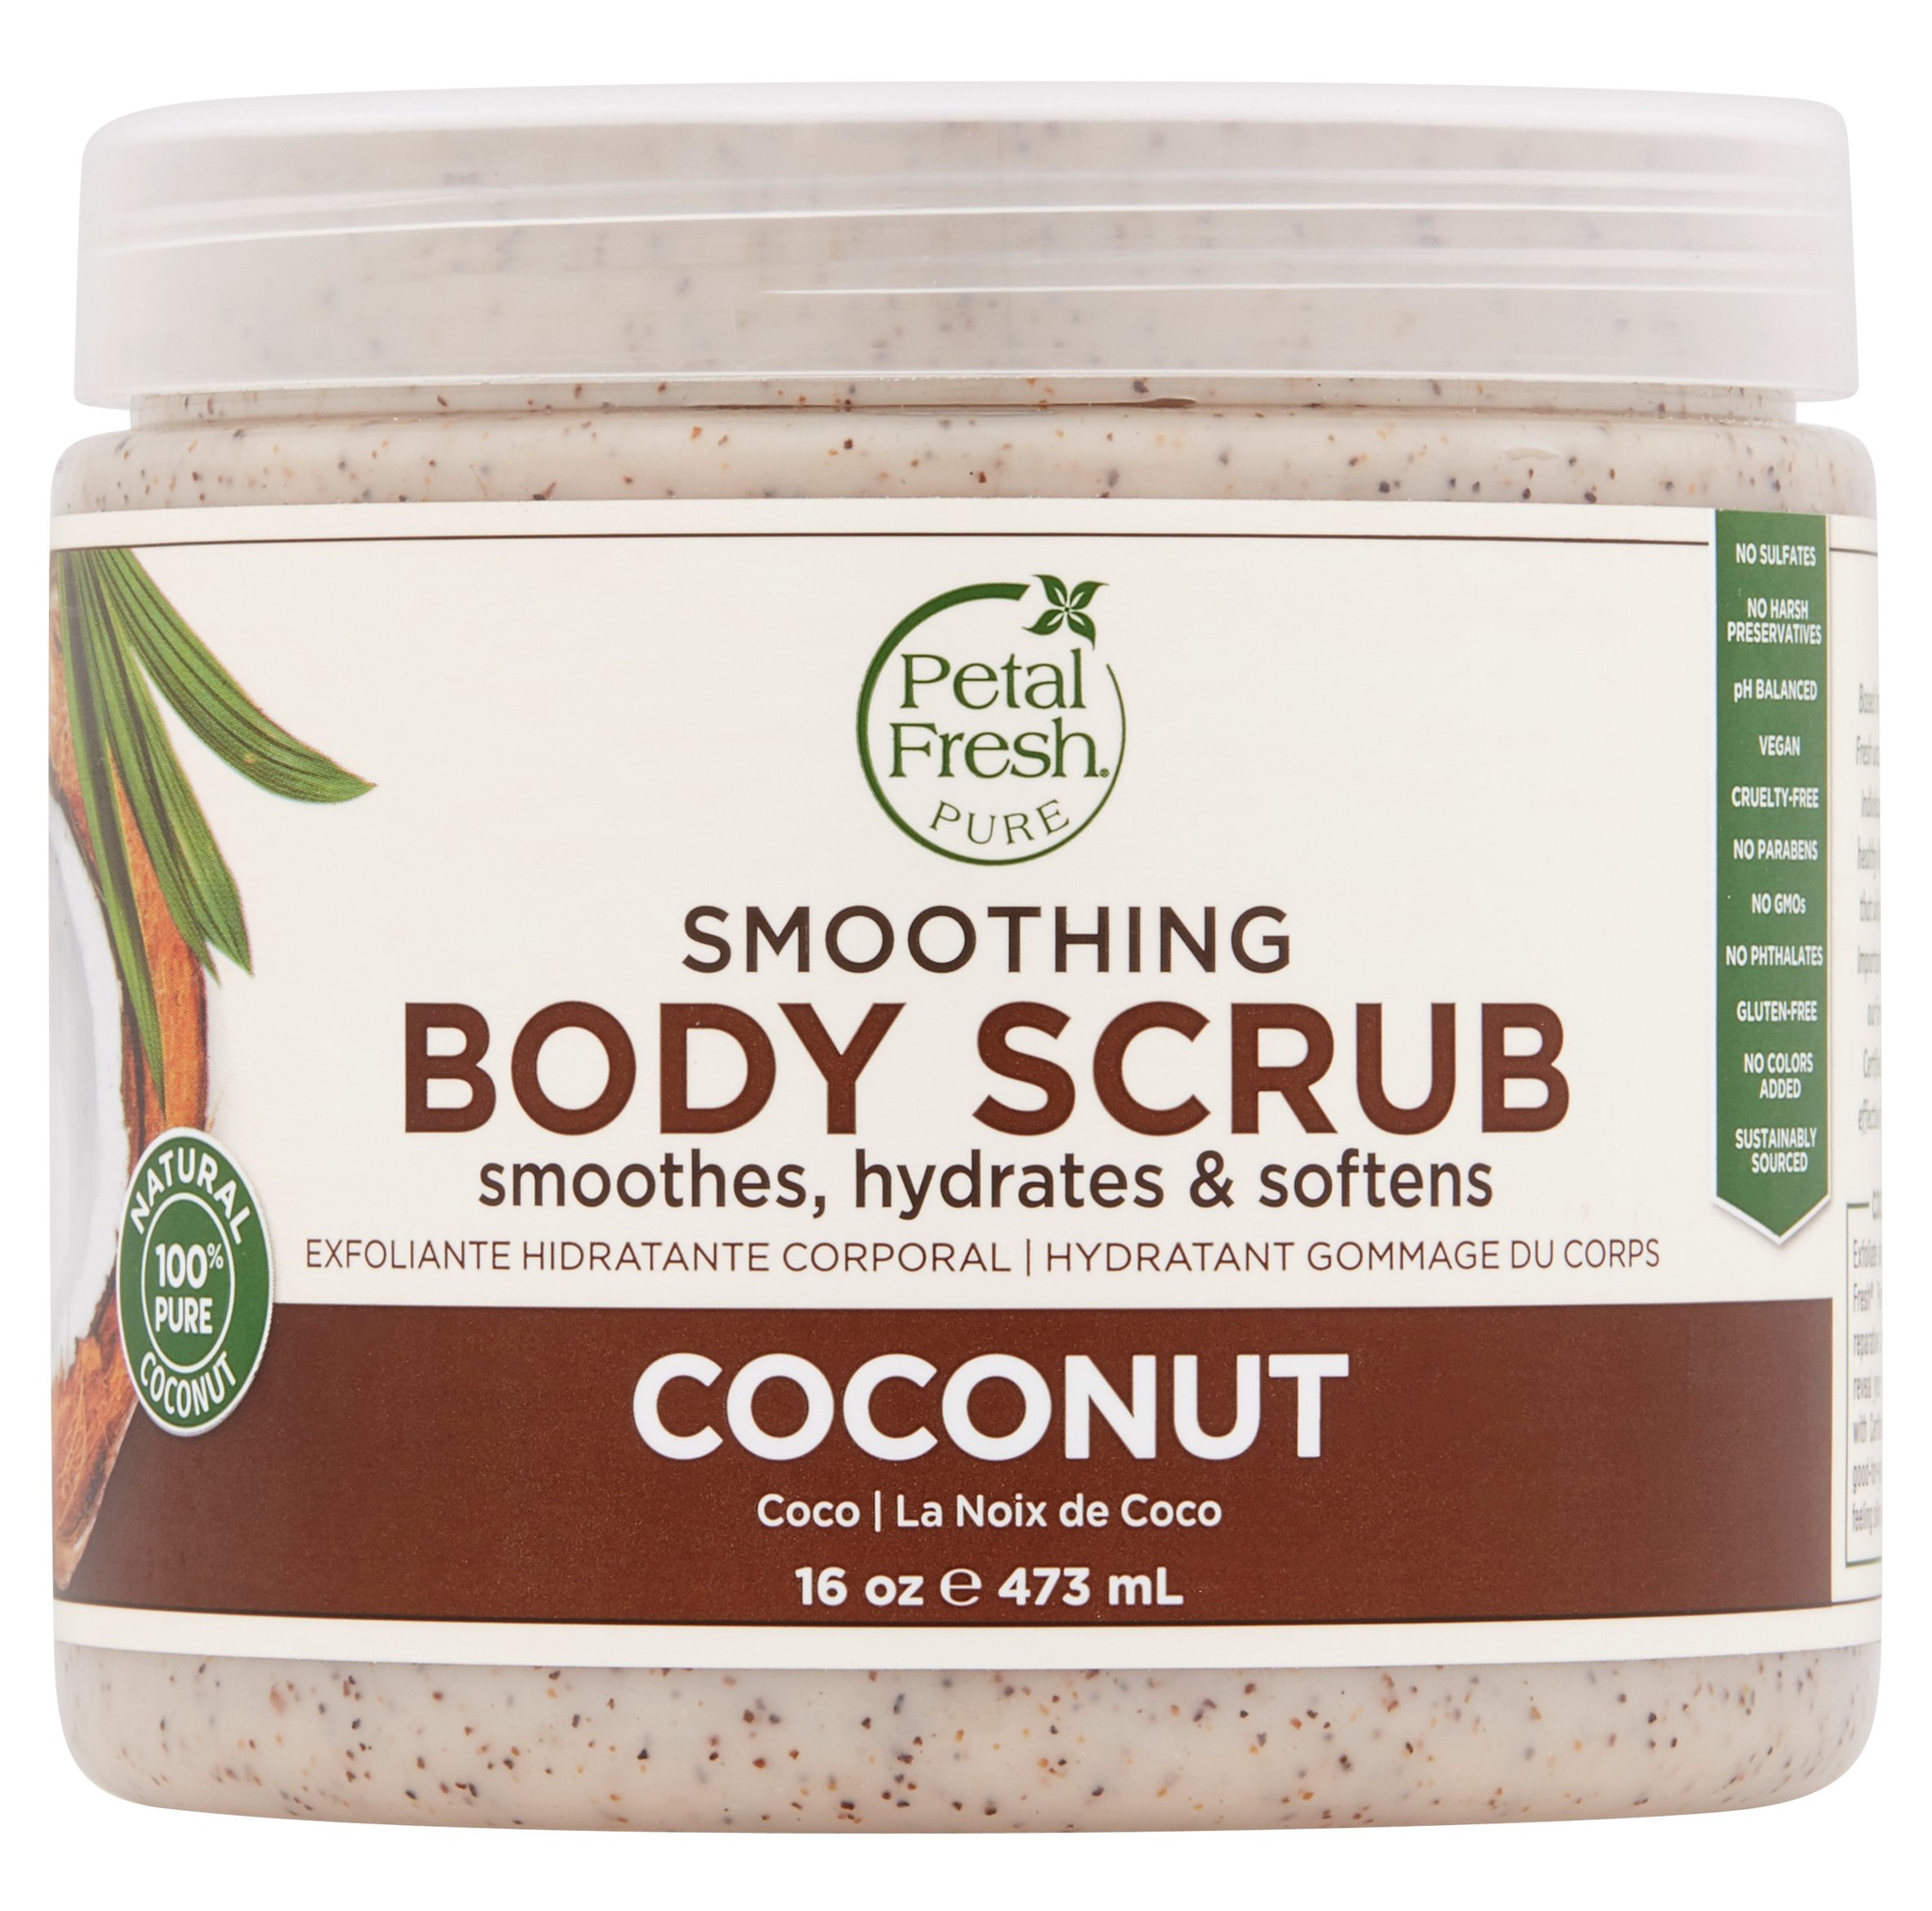 Petal Fresh Coconut Oil Smoothing Body Scrub